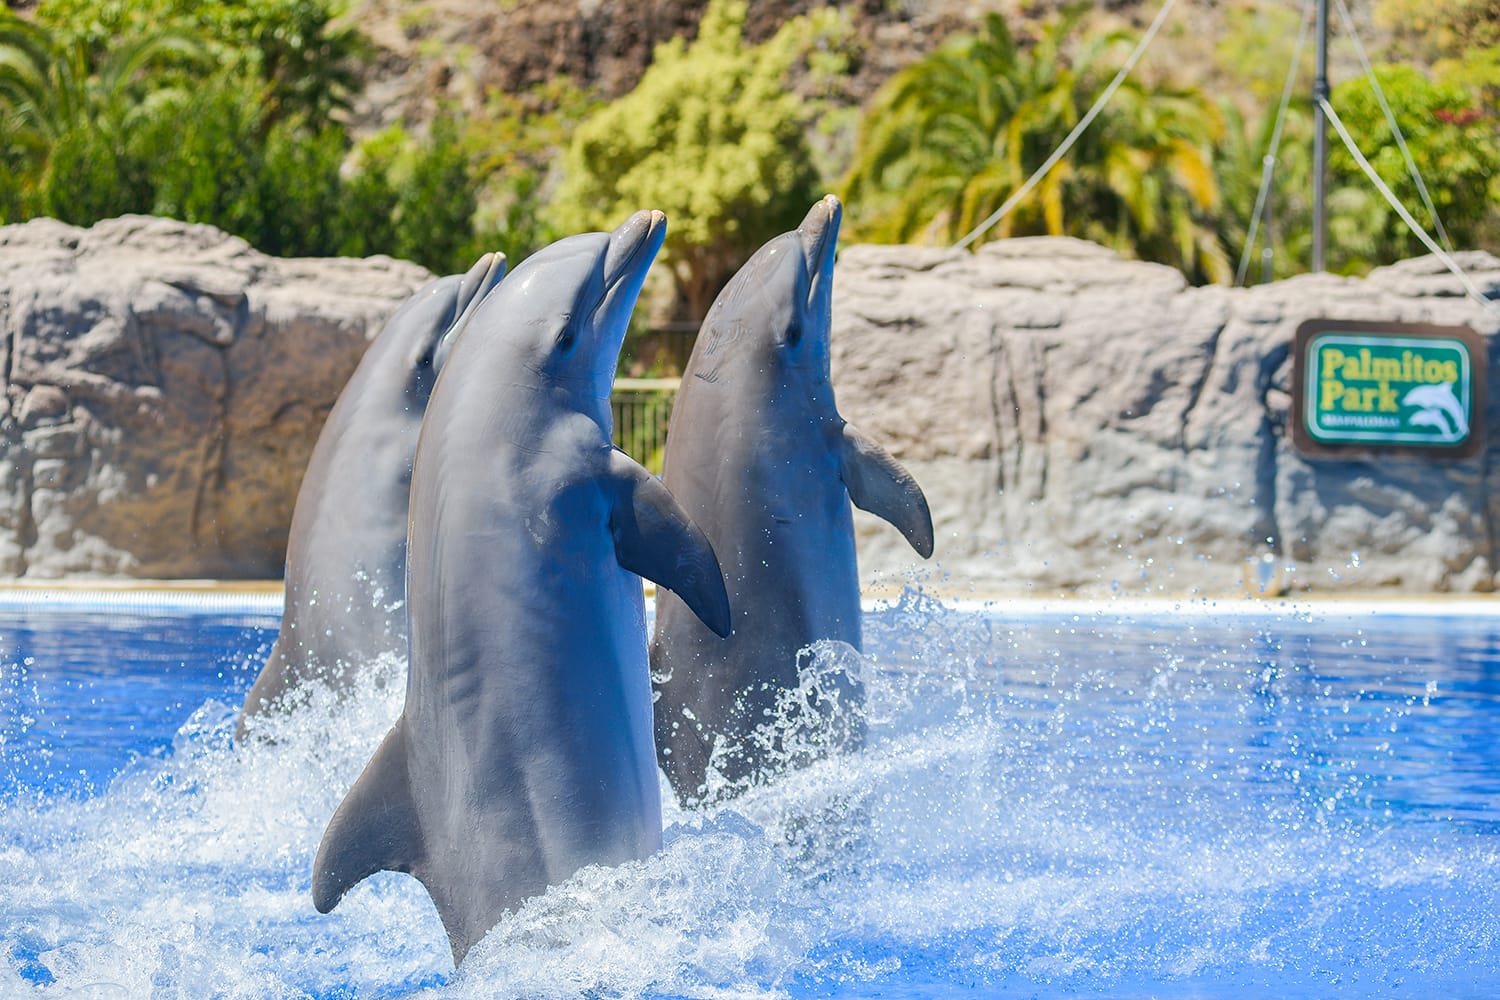 Dolphins show at Palmitos Park in Maspalomas, Gran Canaria, Spain